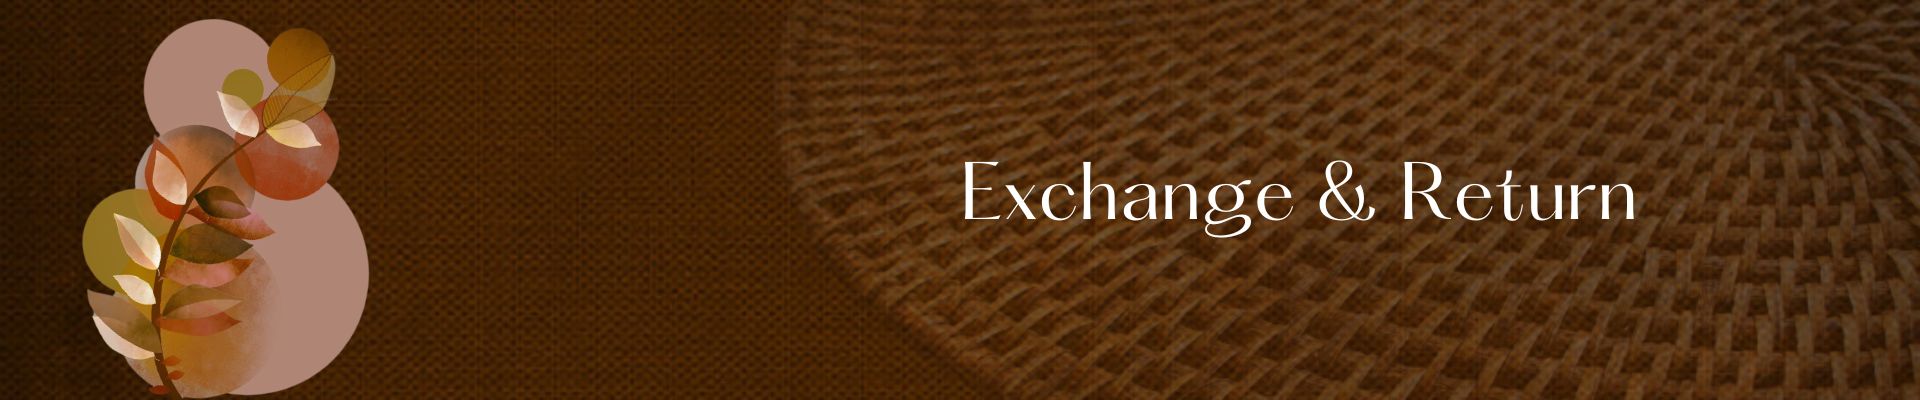 exchange and return banner